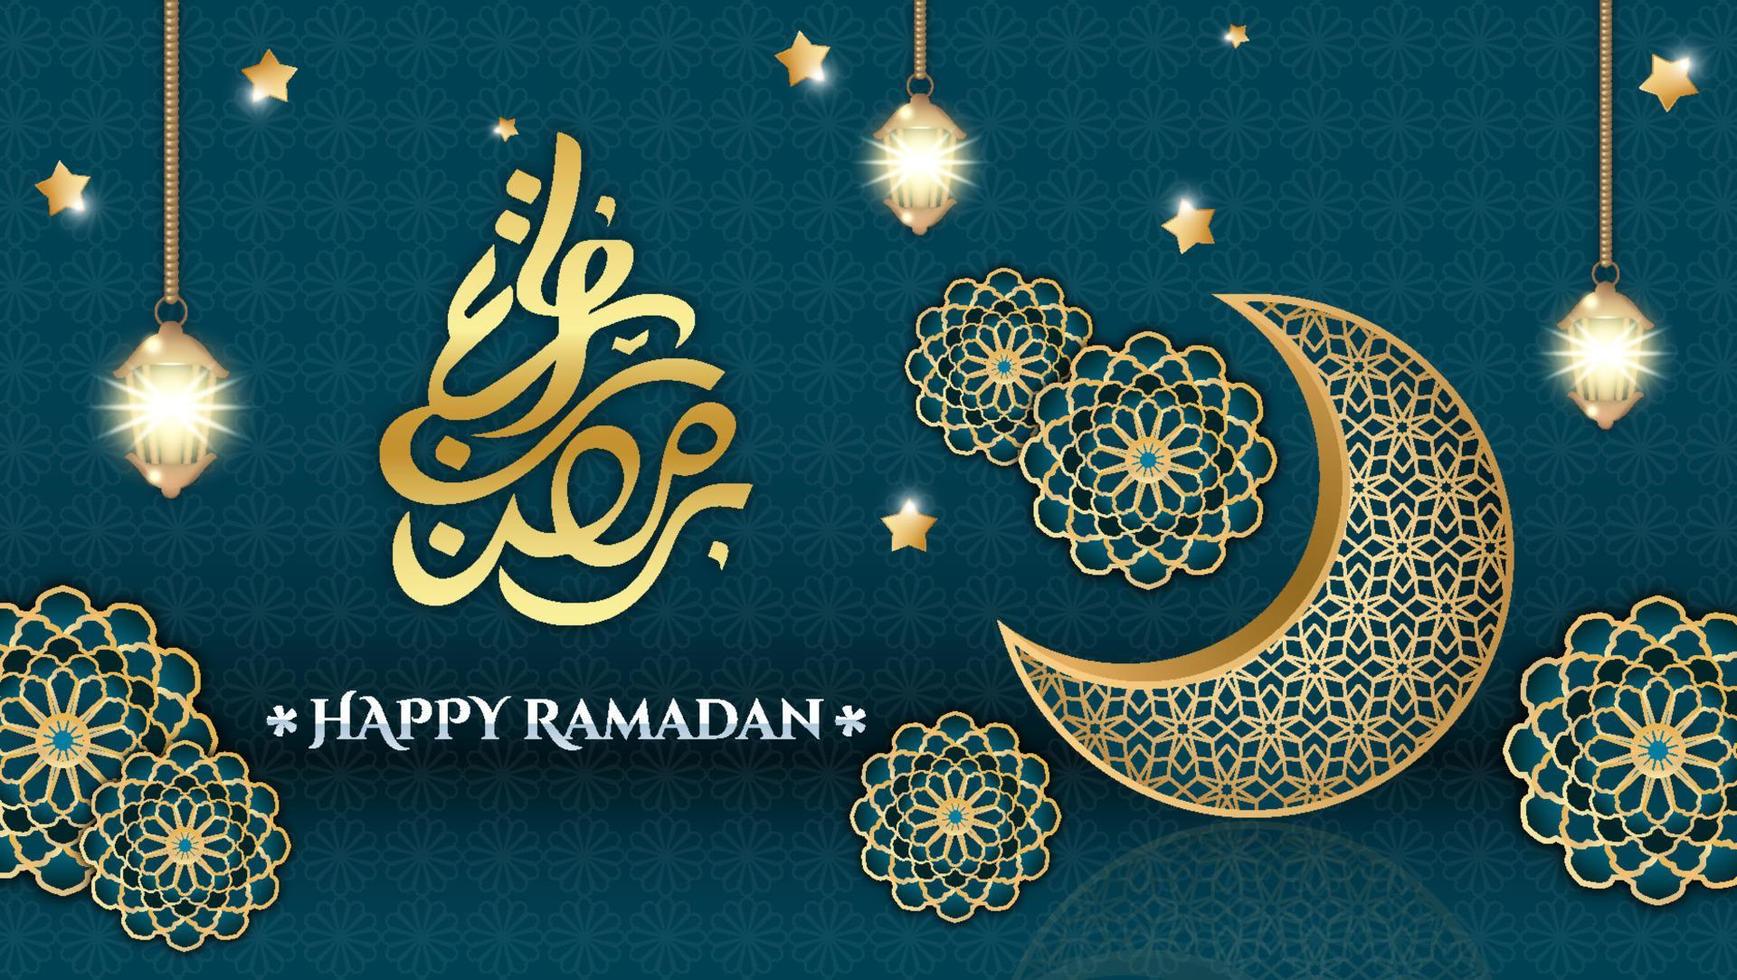 Ramadan kareem islamic background with element vector